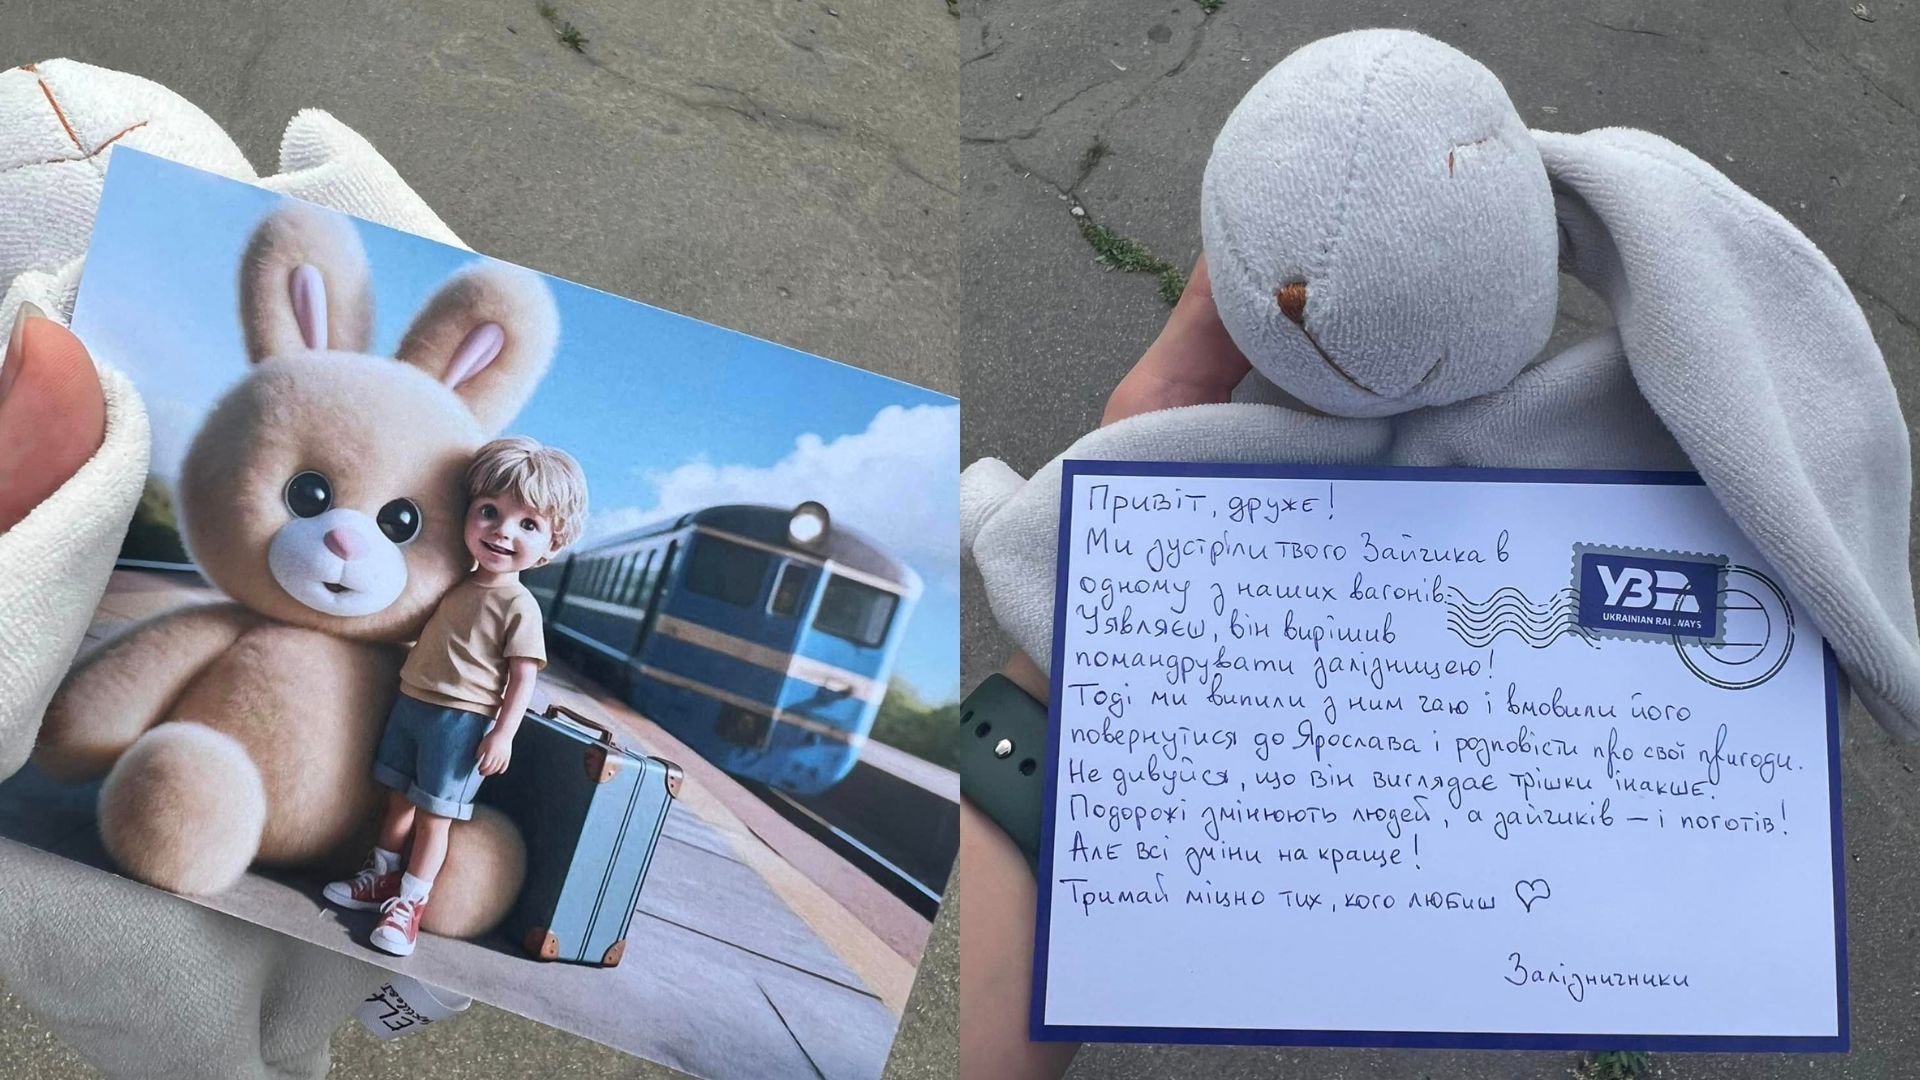 Укрзализныця подарила мальчику игрушку-зайчика